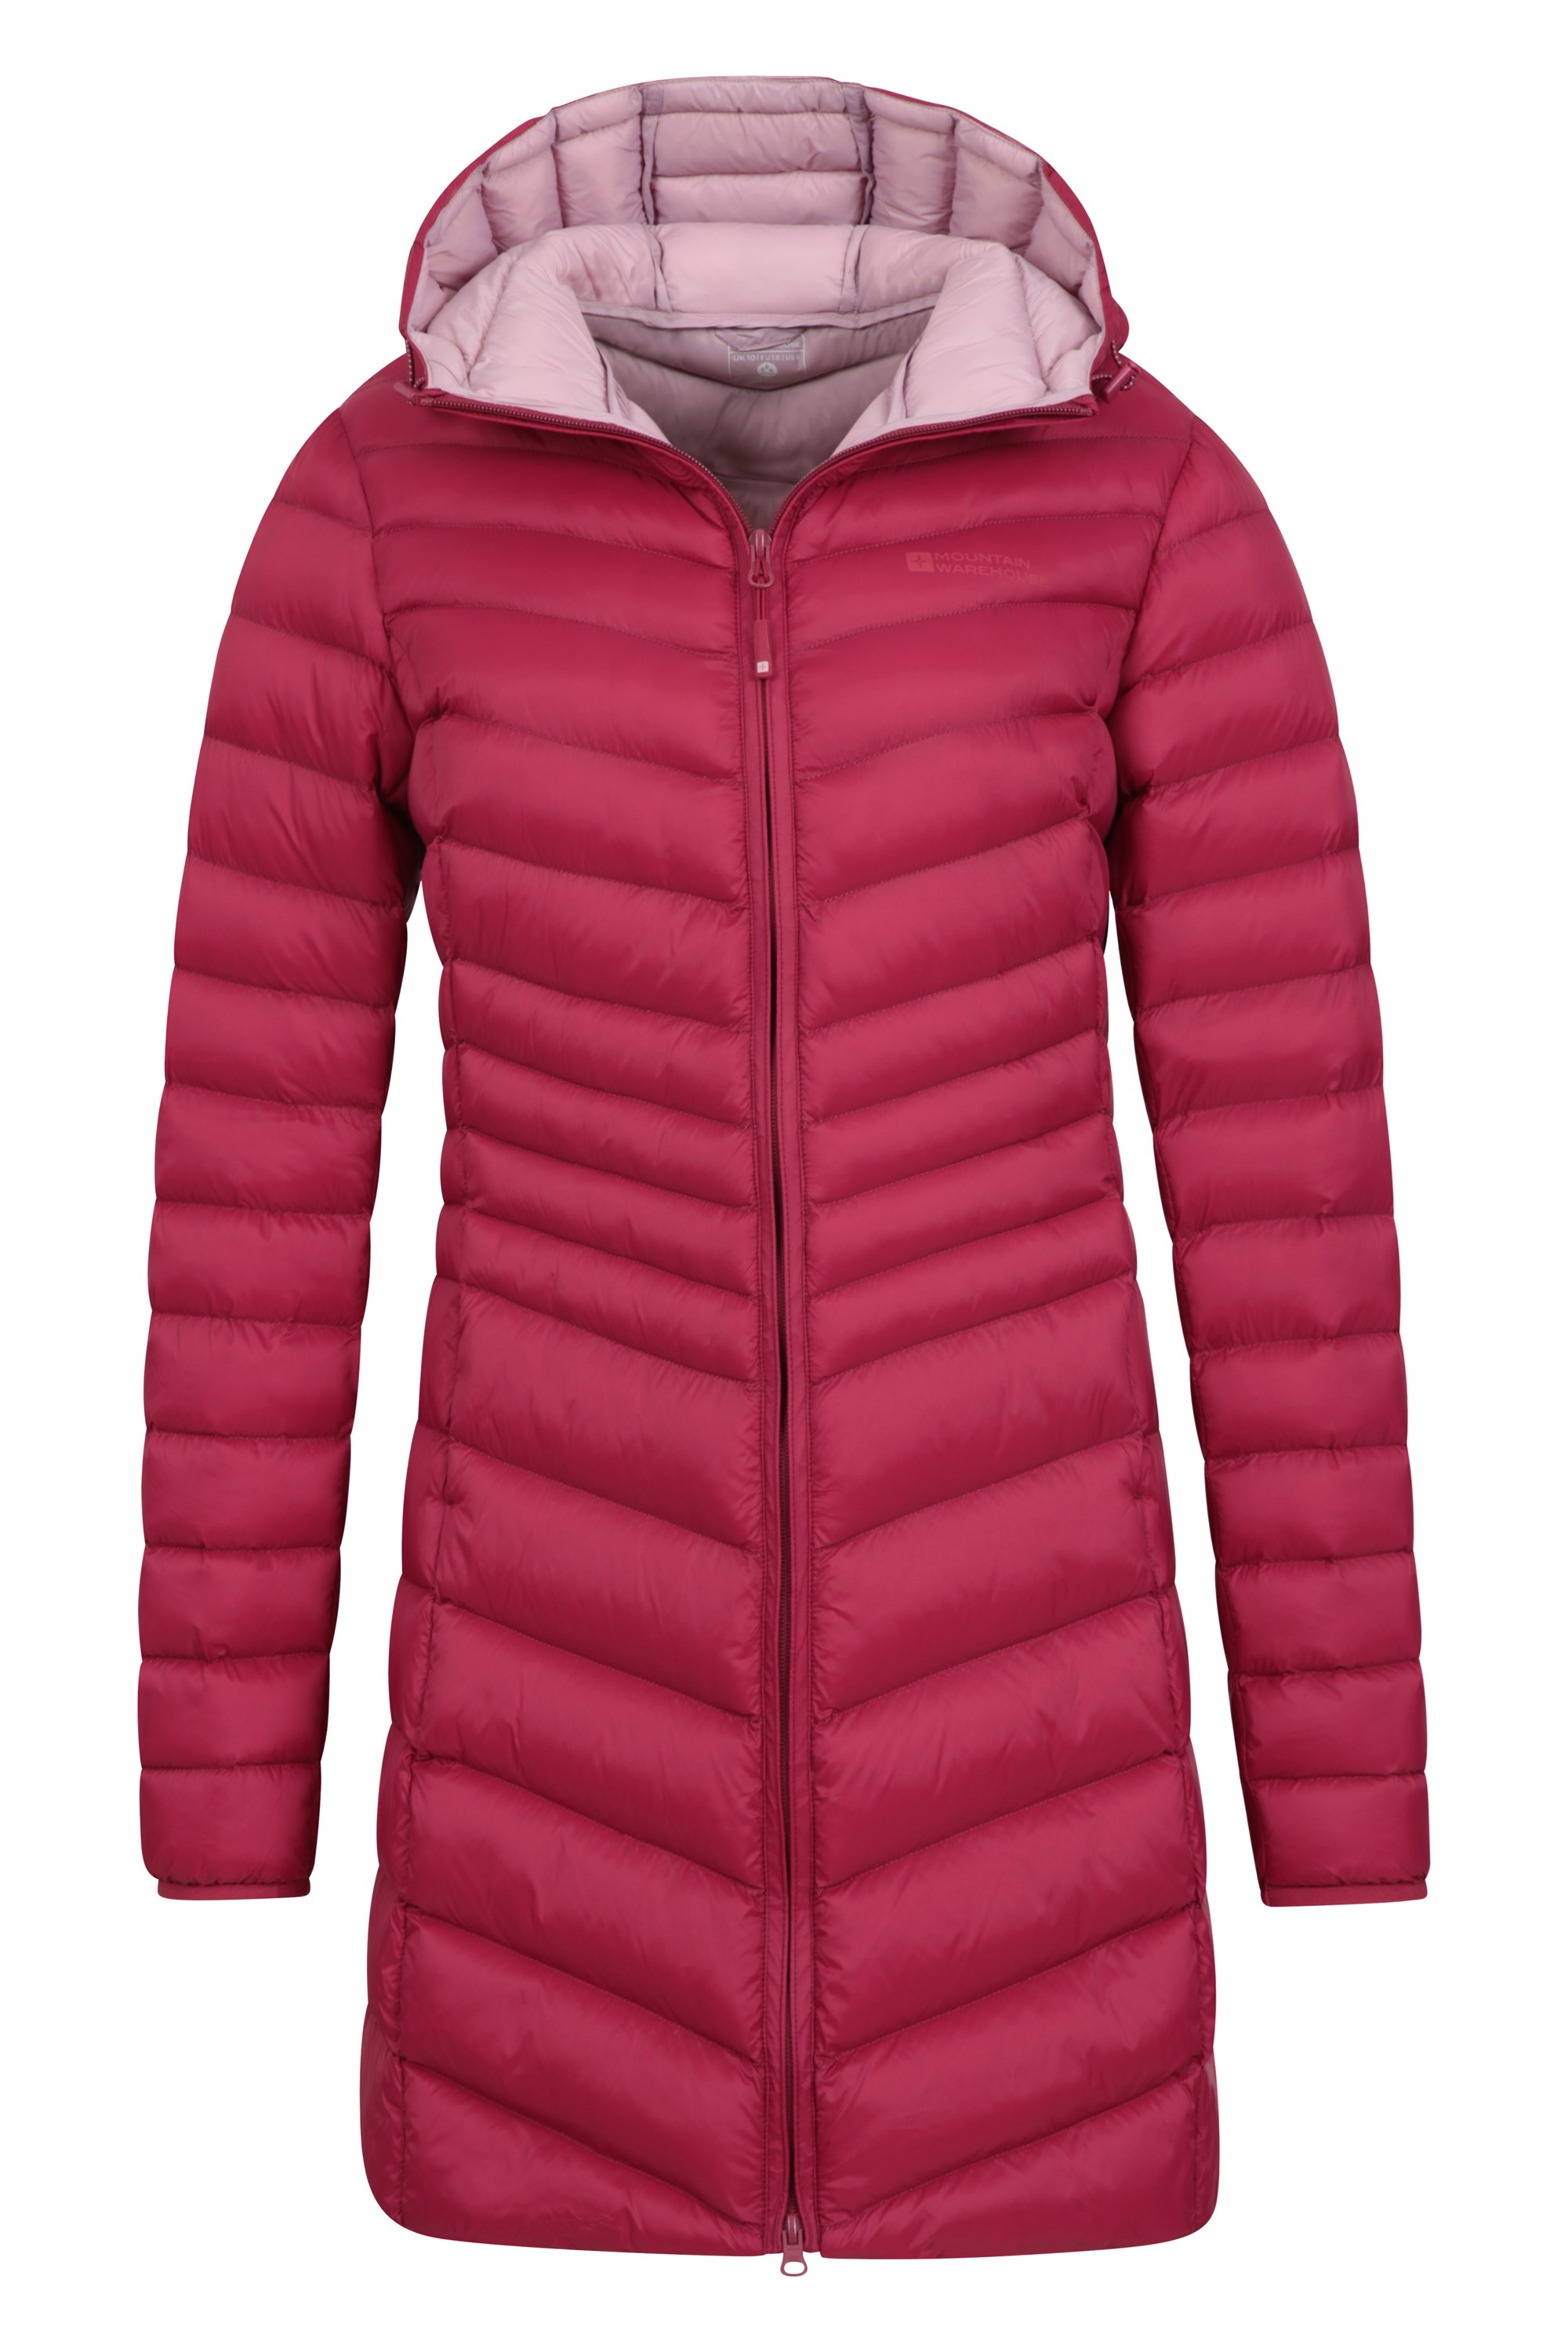 30C Heat Rating Lightweight Ladies Jacket Warm for Outdoors Walking Water Resistant Rain Coat Mountain Warehouse Florence Womens Winter Long Padded Jacket